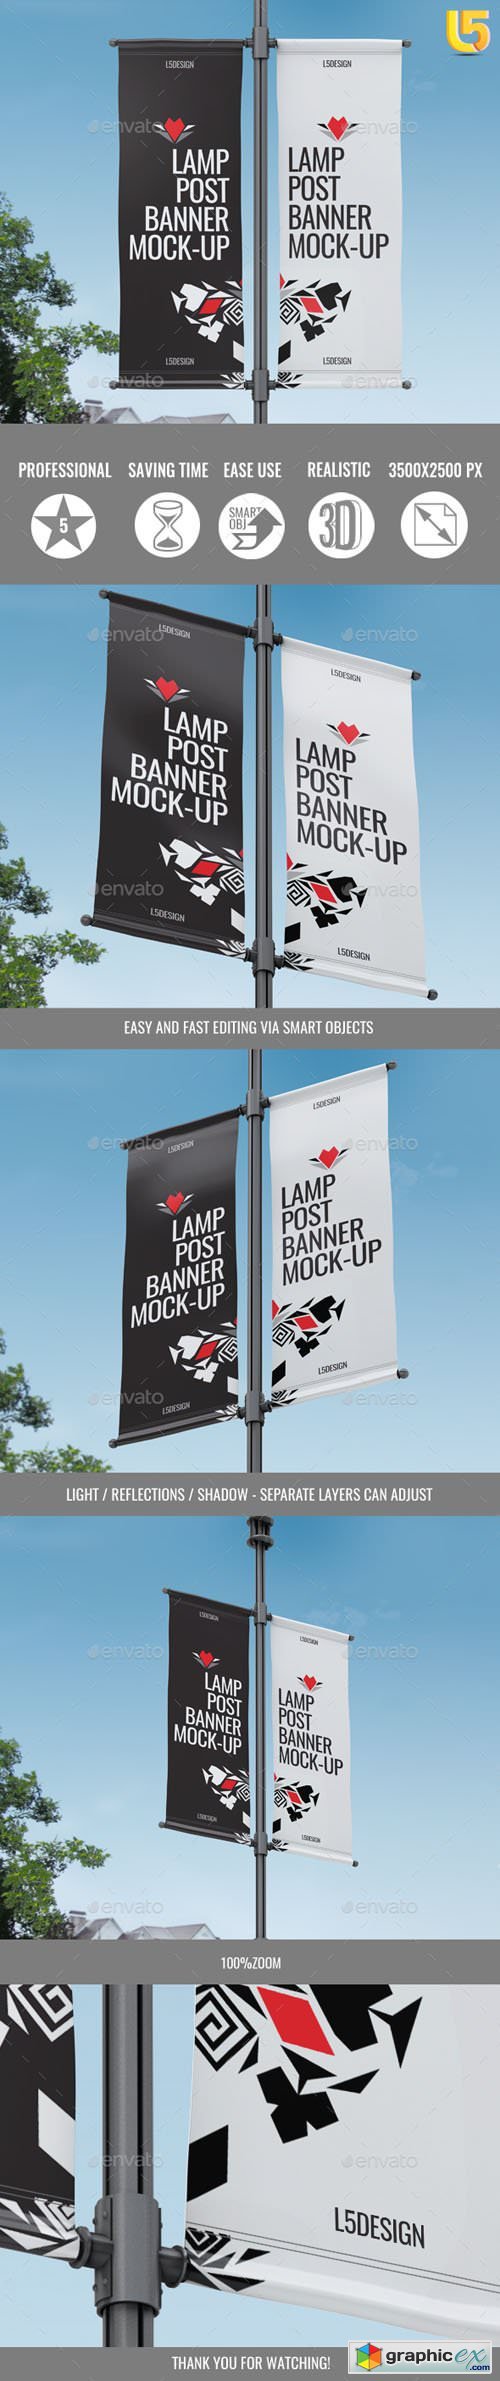 Lamp Post Banner Mock-Up